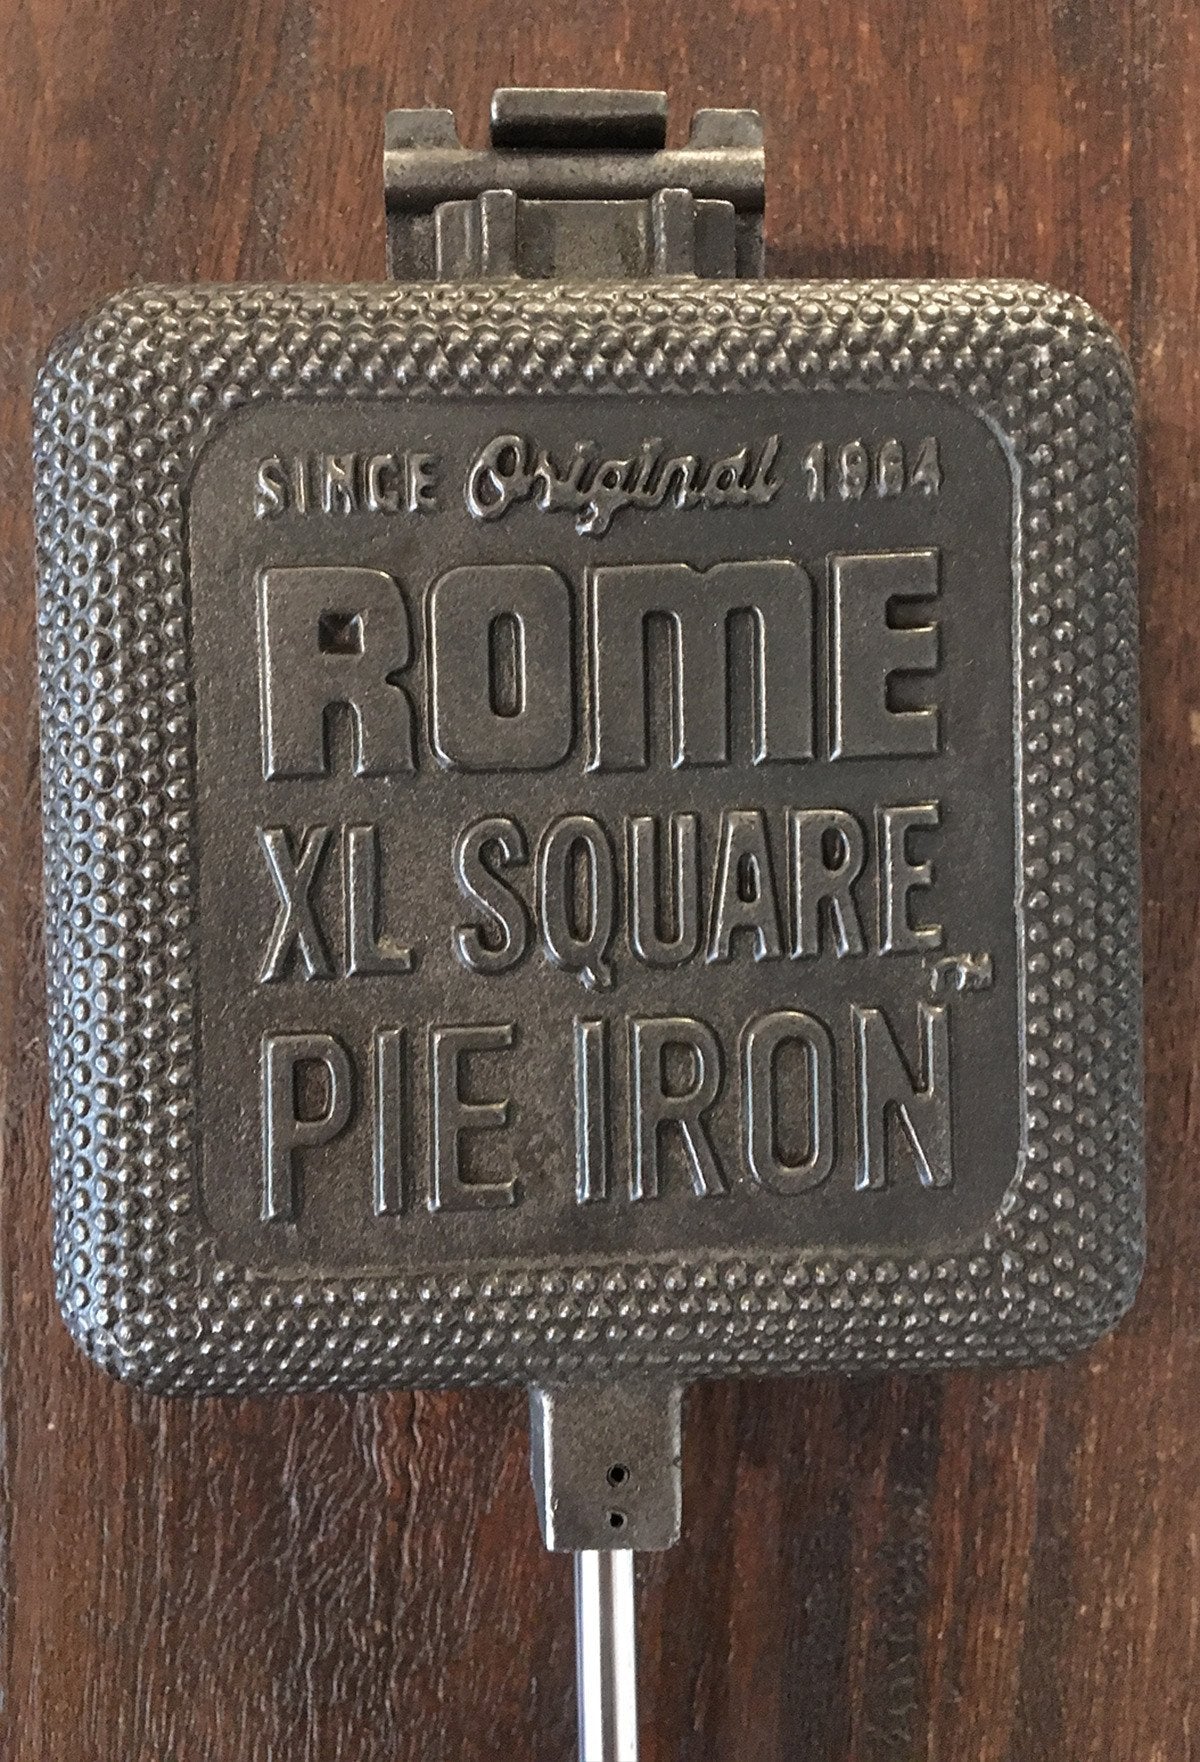 XL Square Pie Iron - Cast Iron, Rome Industries #1760 – romeindustries